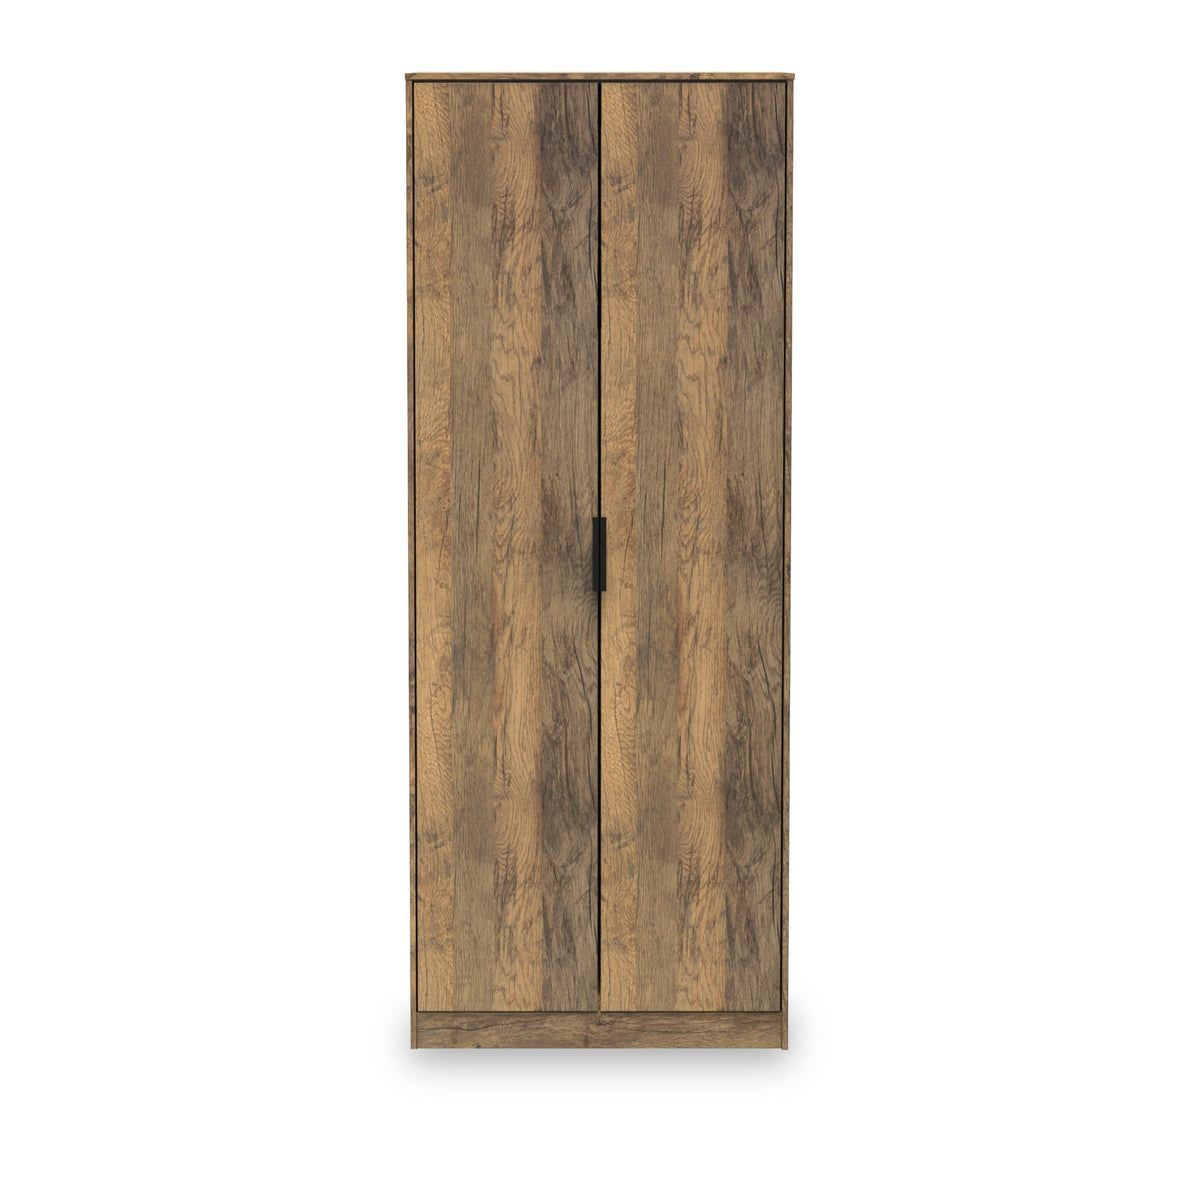 Moreno Rustic Oak 2 Door Double Wardrobe from Roseland Furniture